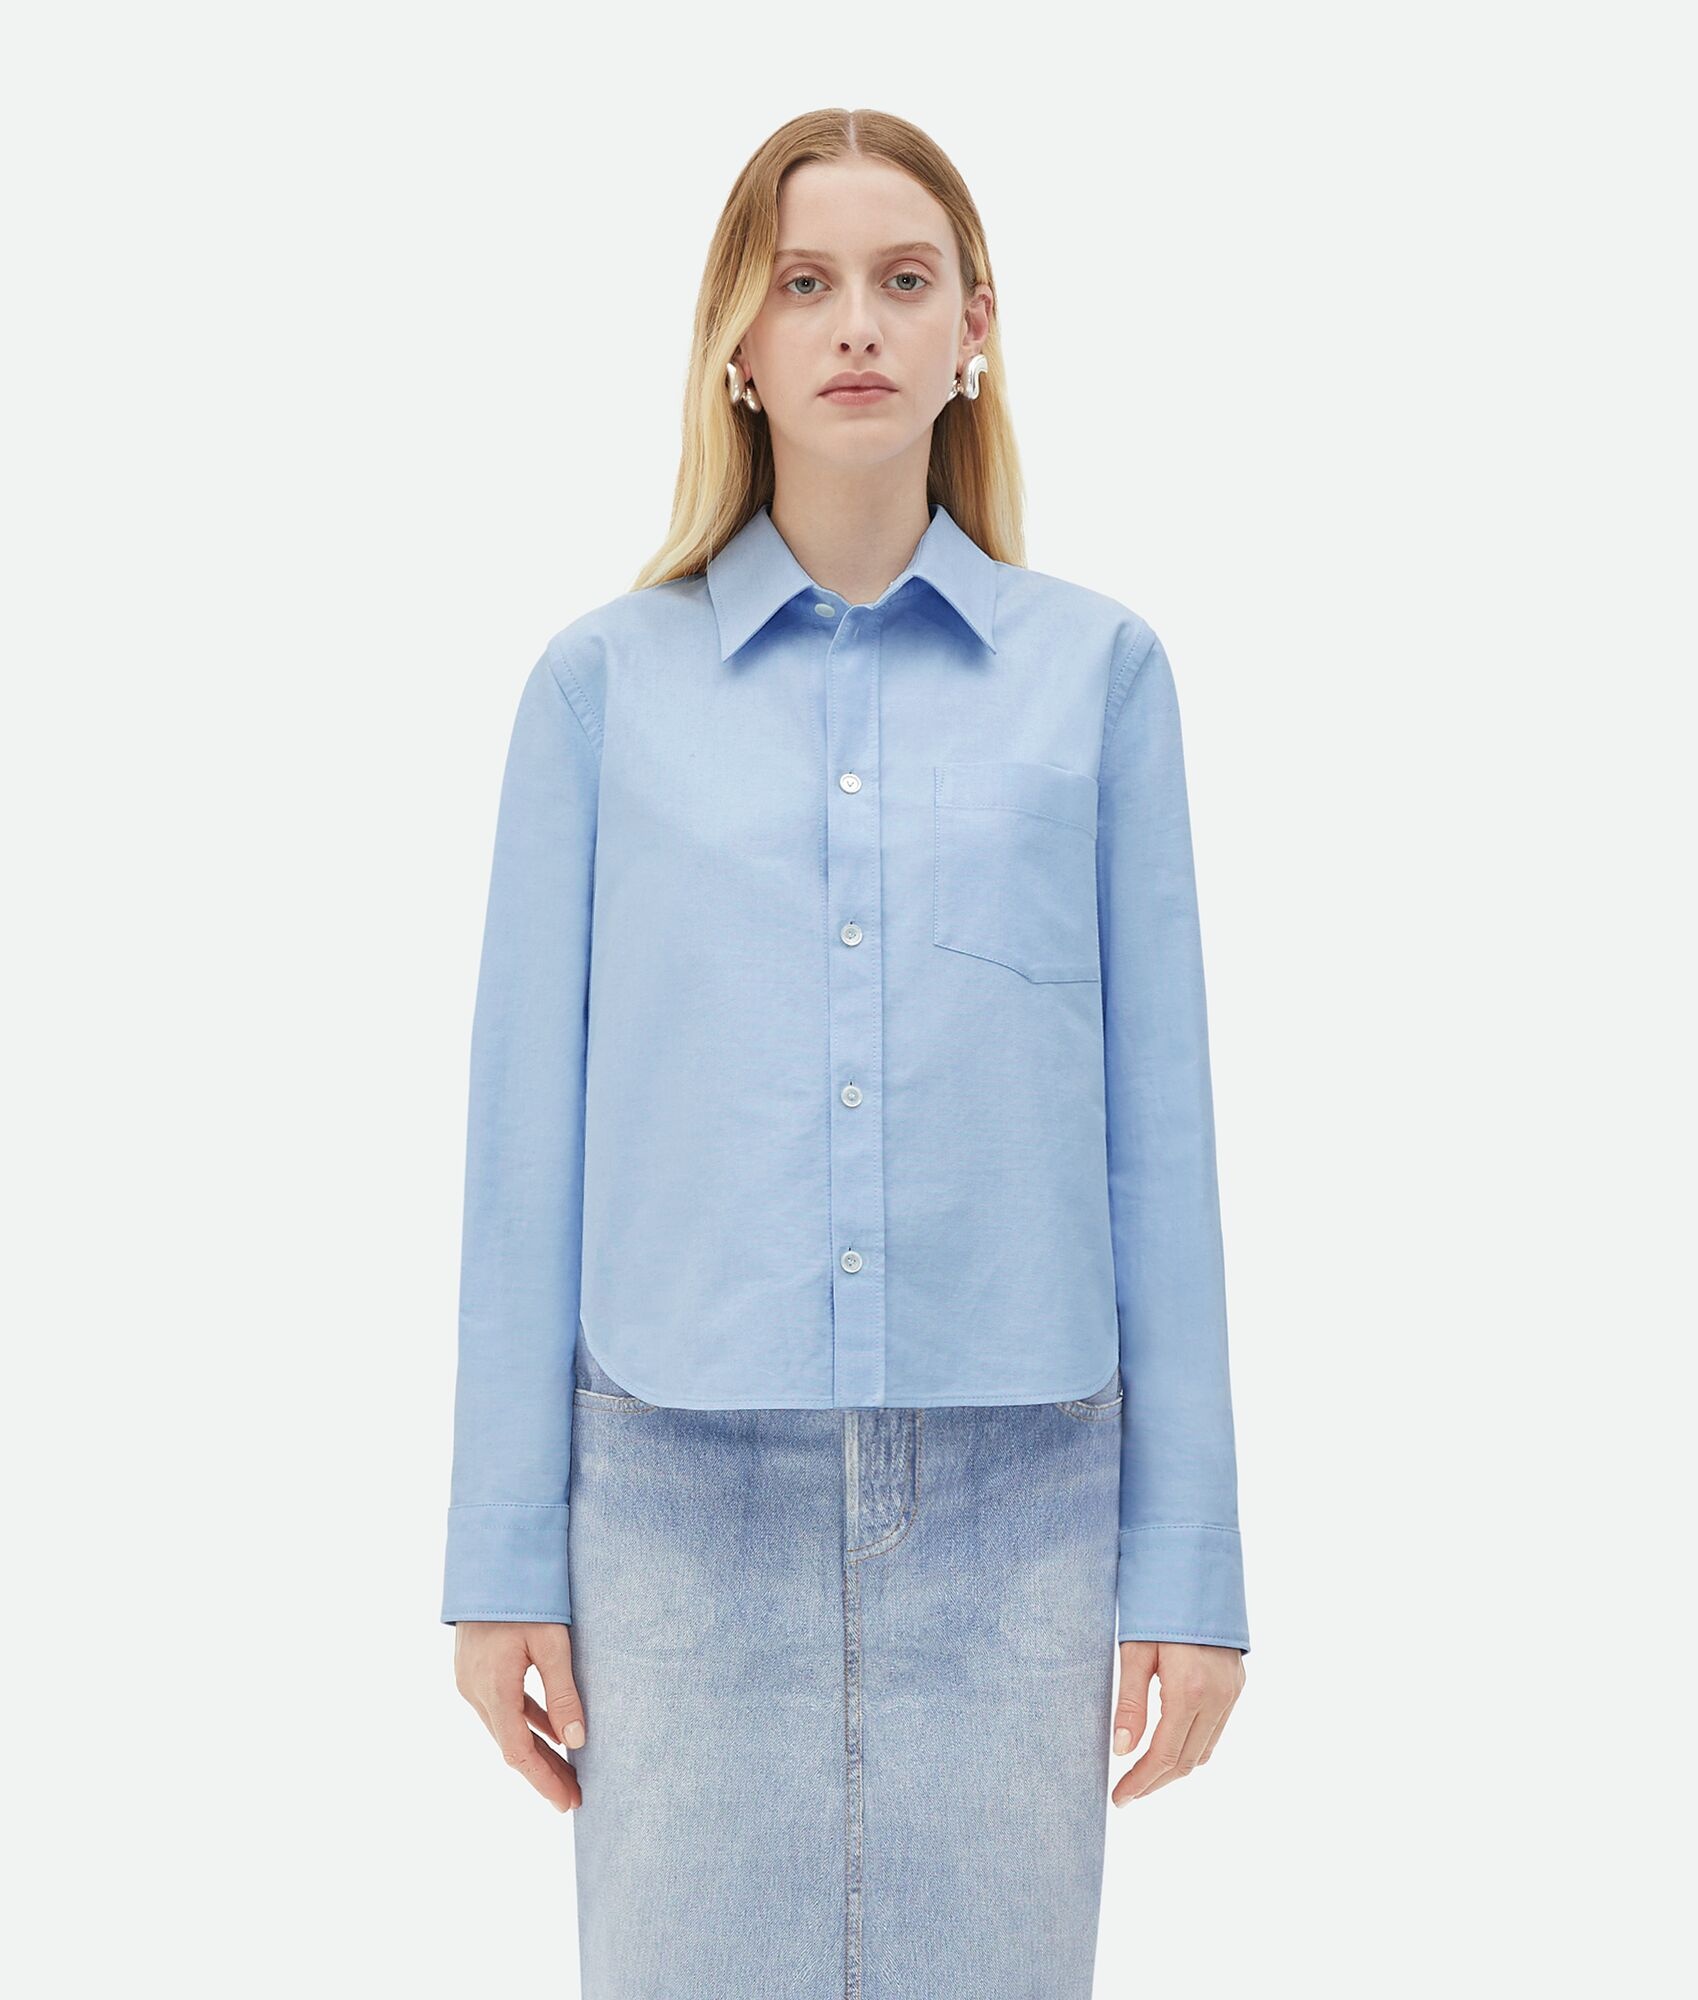 Bottega Veneta Cotton Oxford Shirt | REVERSIBLE